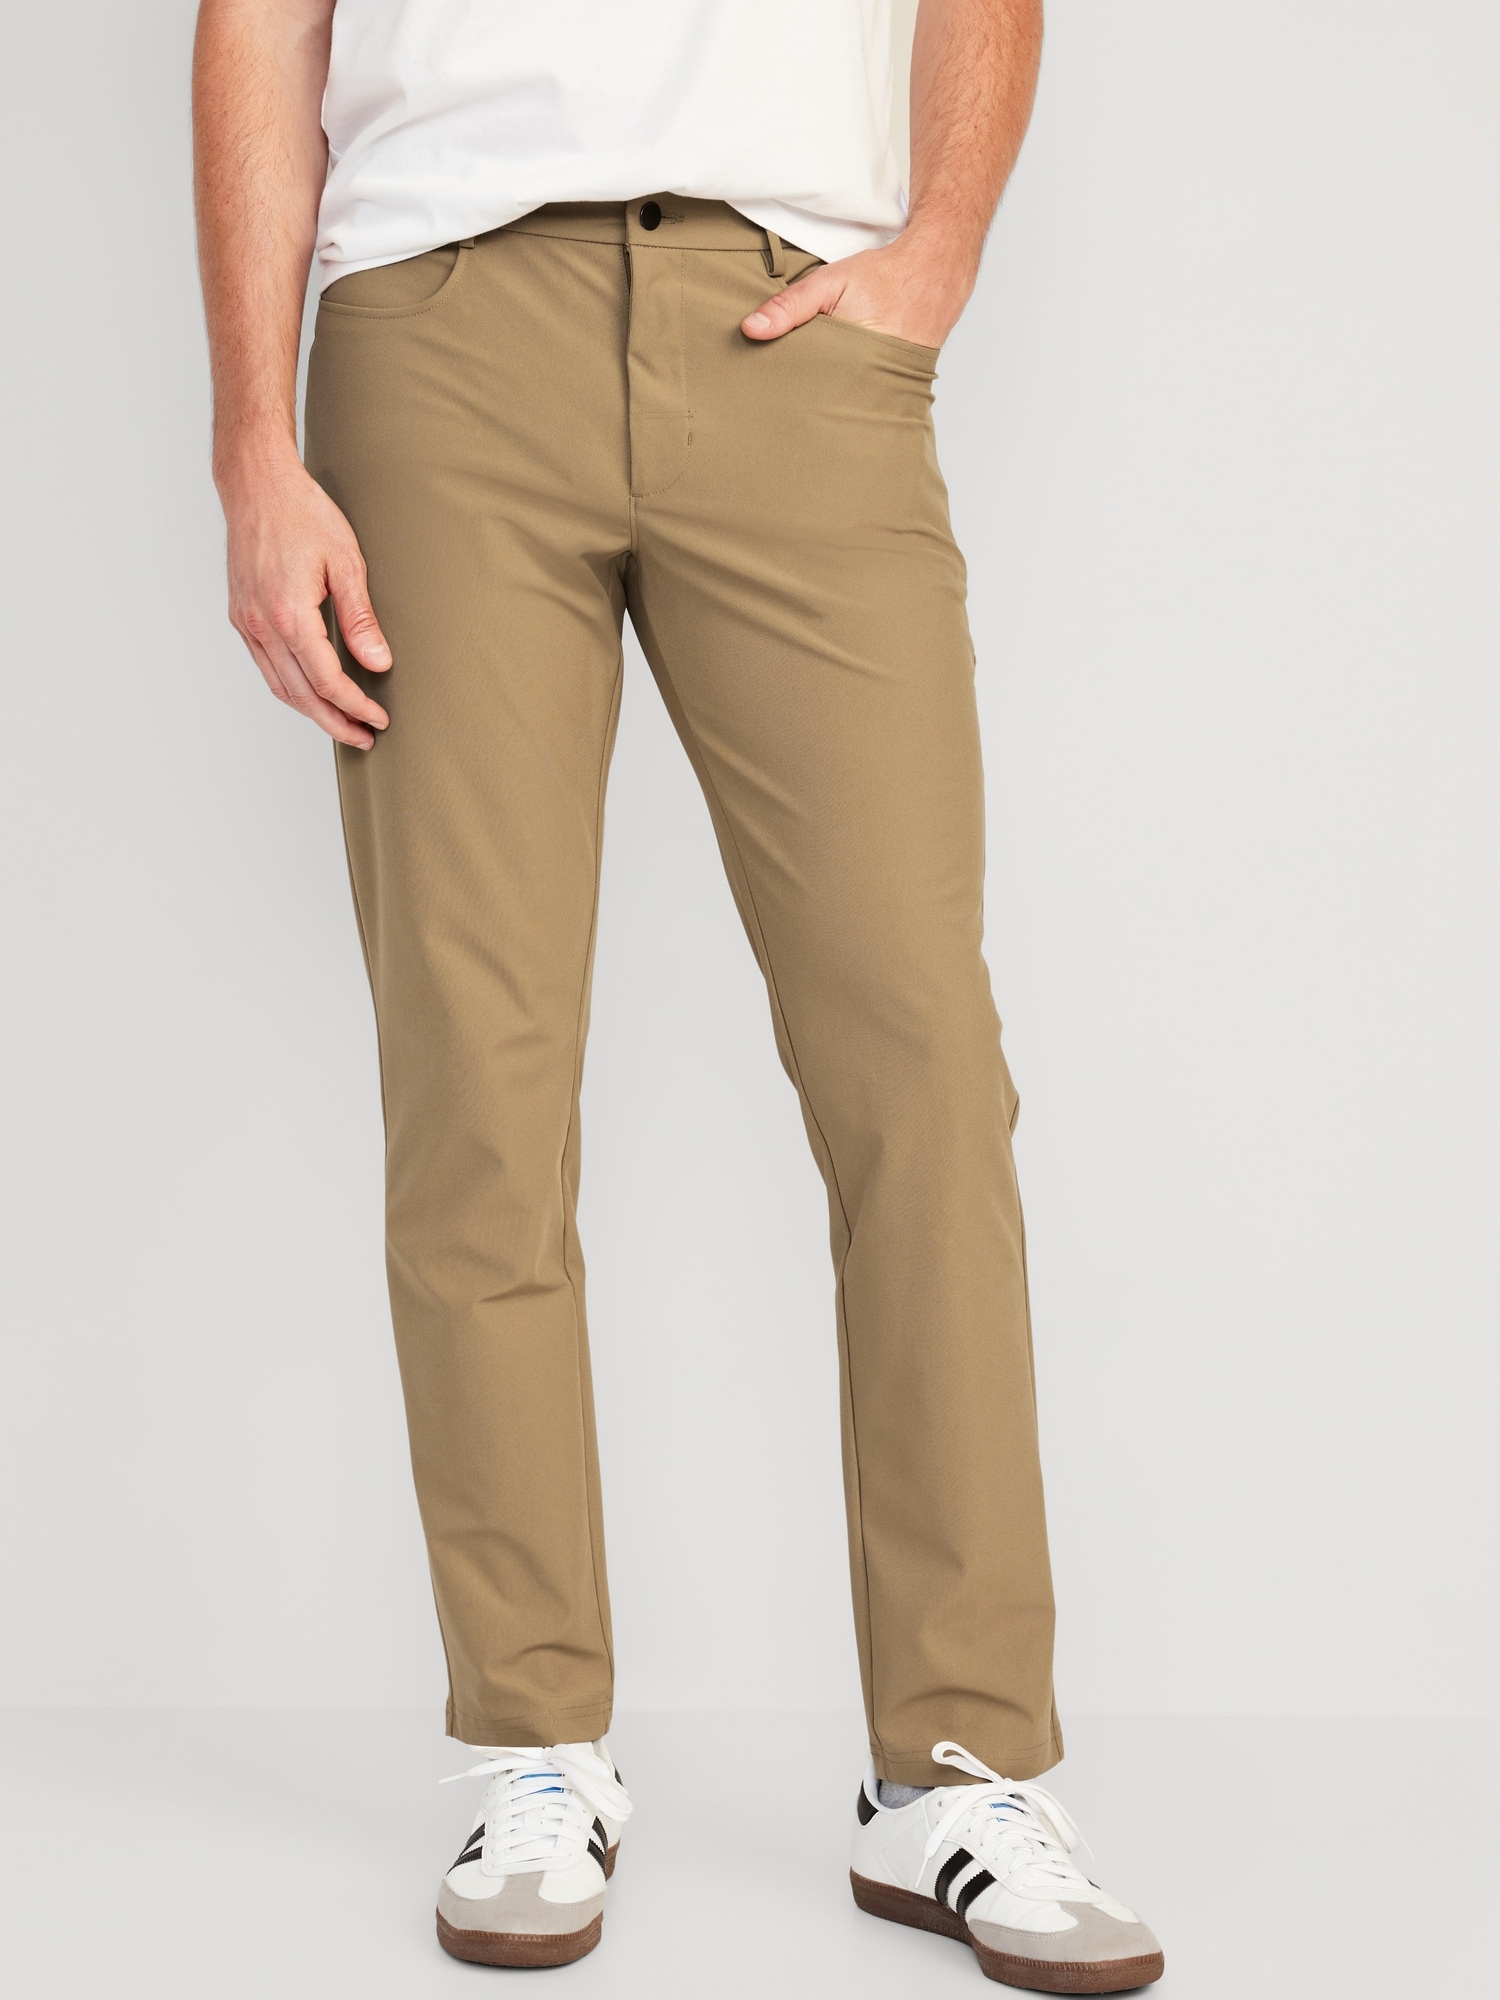 ABC Relaxed-Fit 5 Pocket Pant 32L *Warpstreme, Men's Trousers